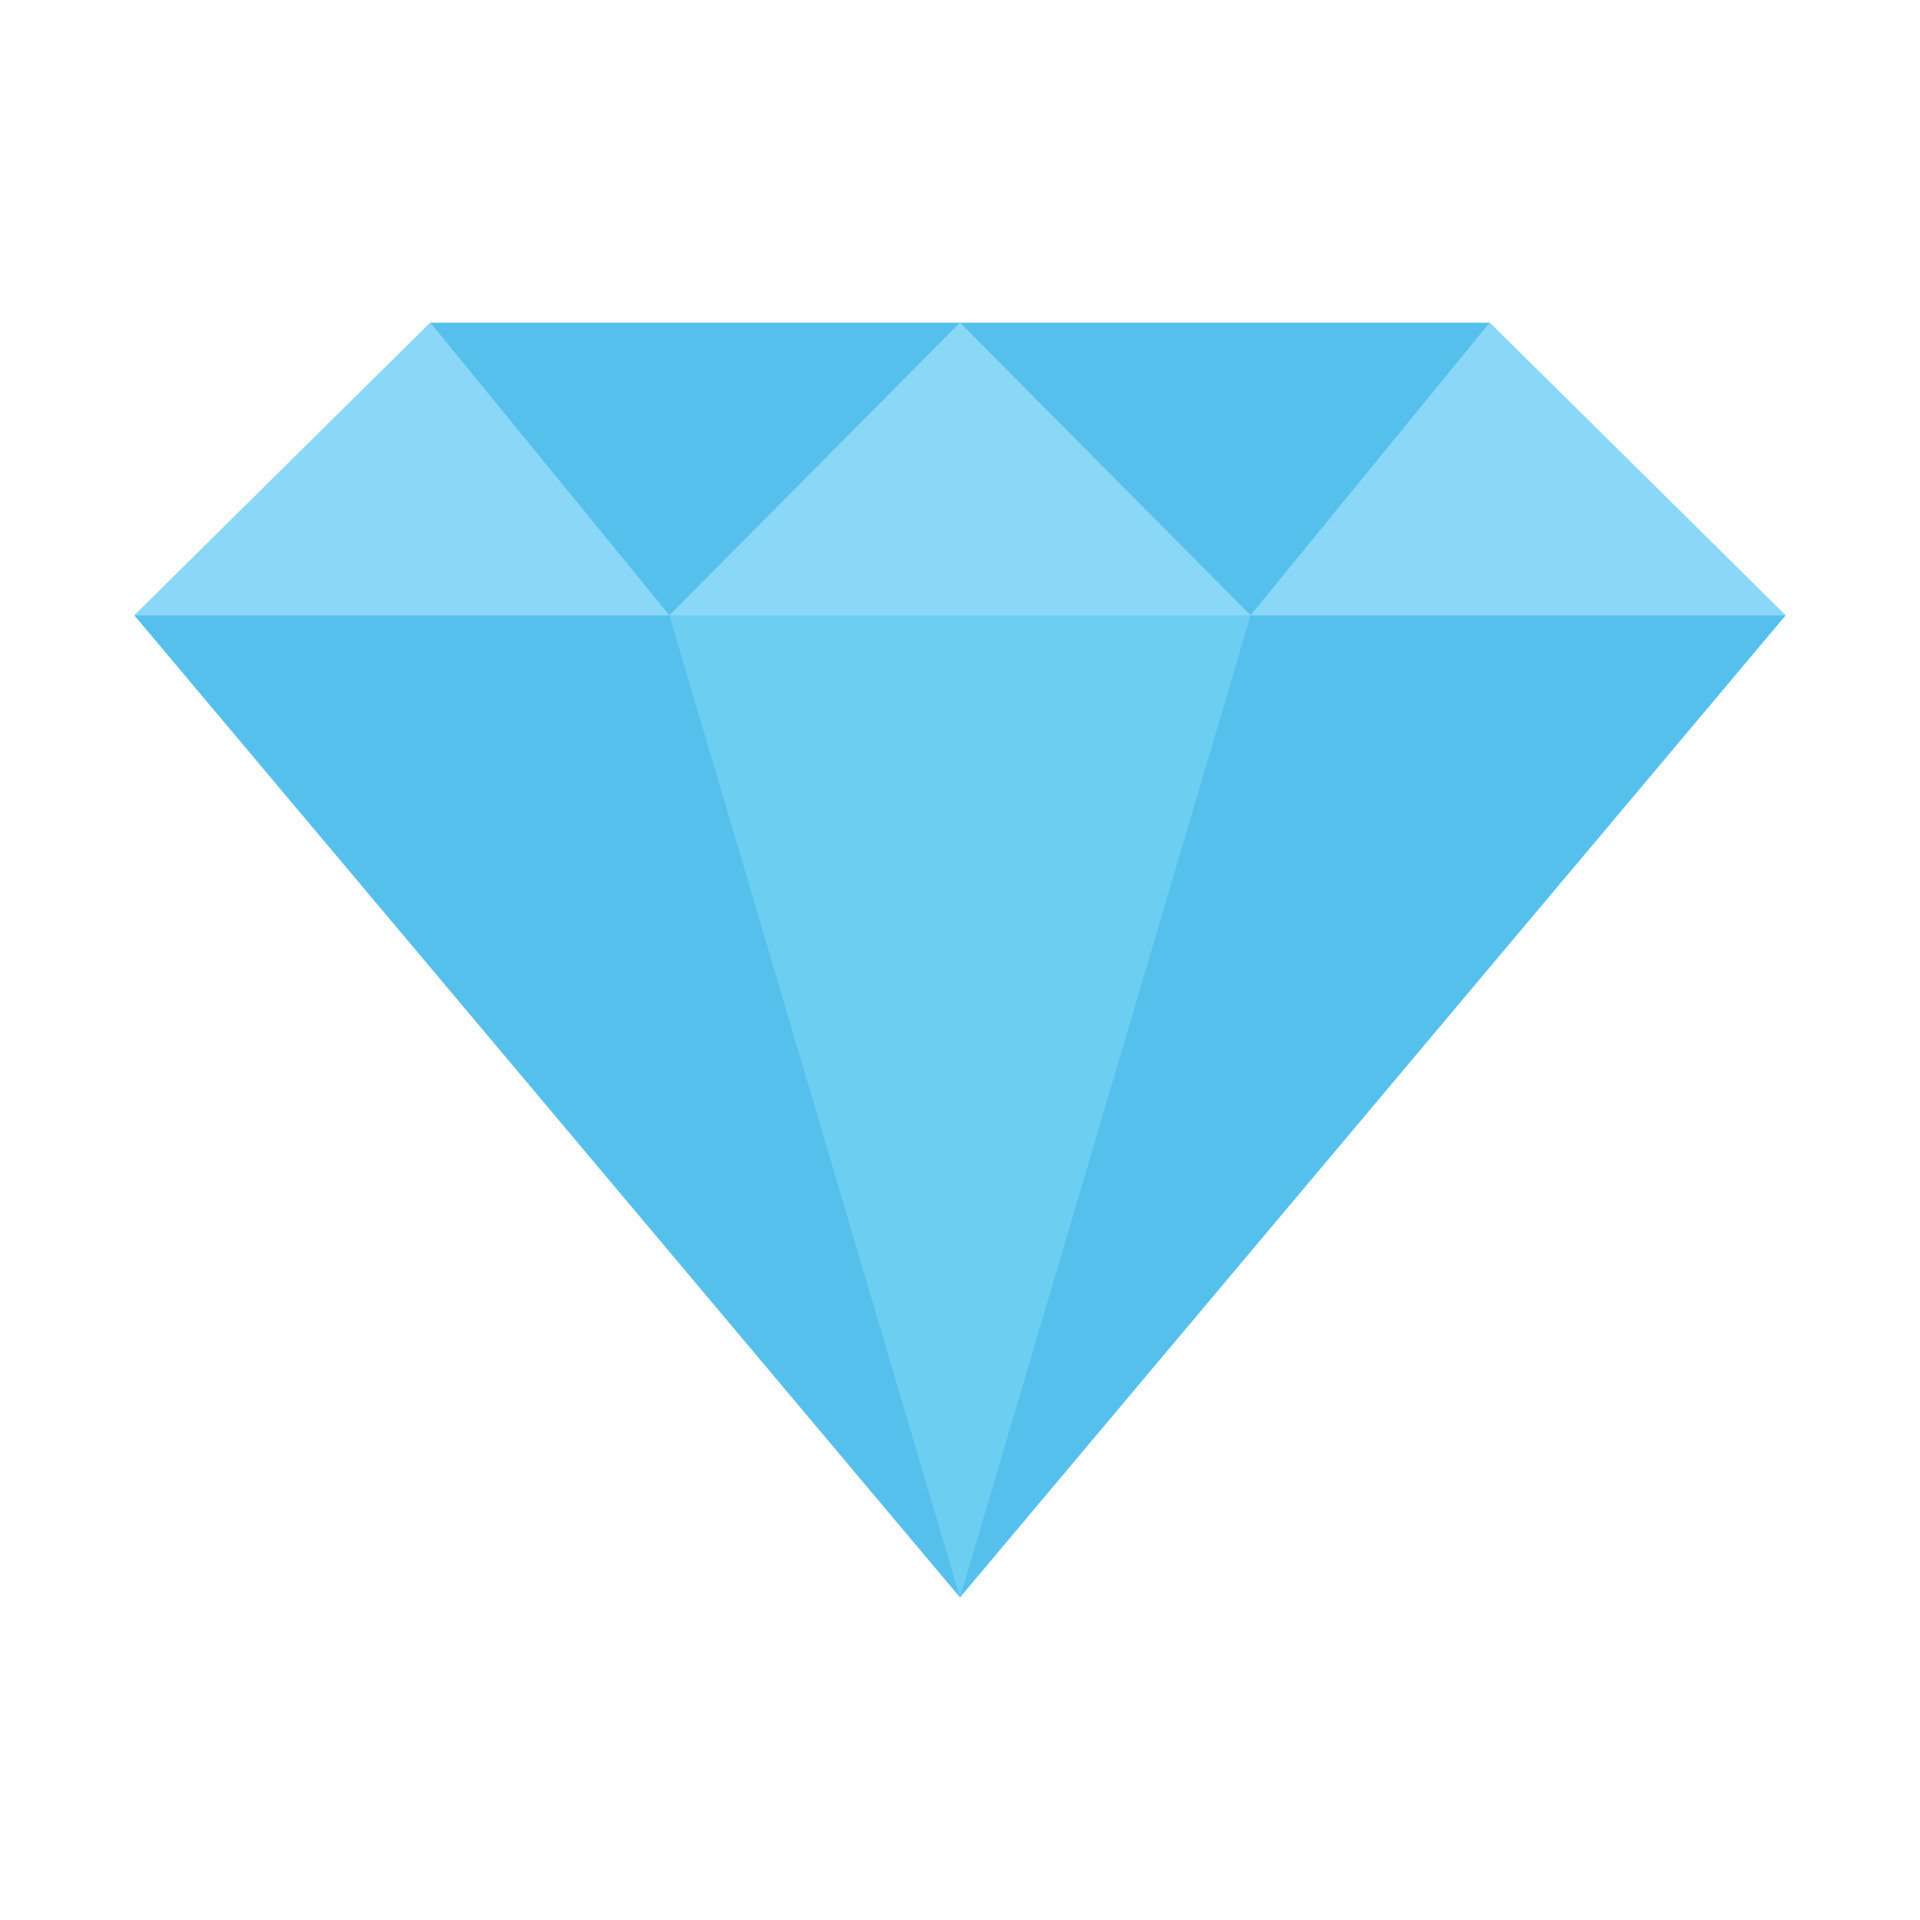 Trendy Diamond Concepts 5442810 Vector Art at Vecteezy